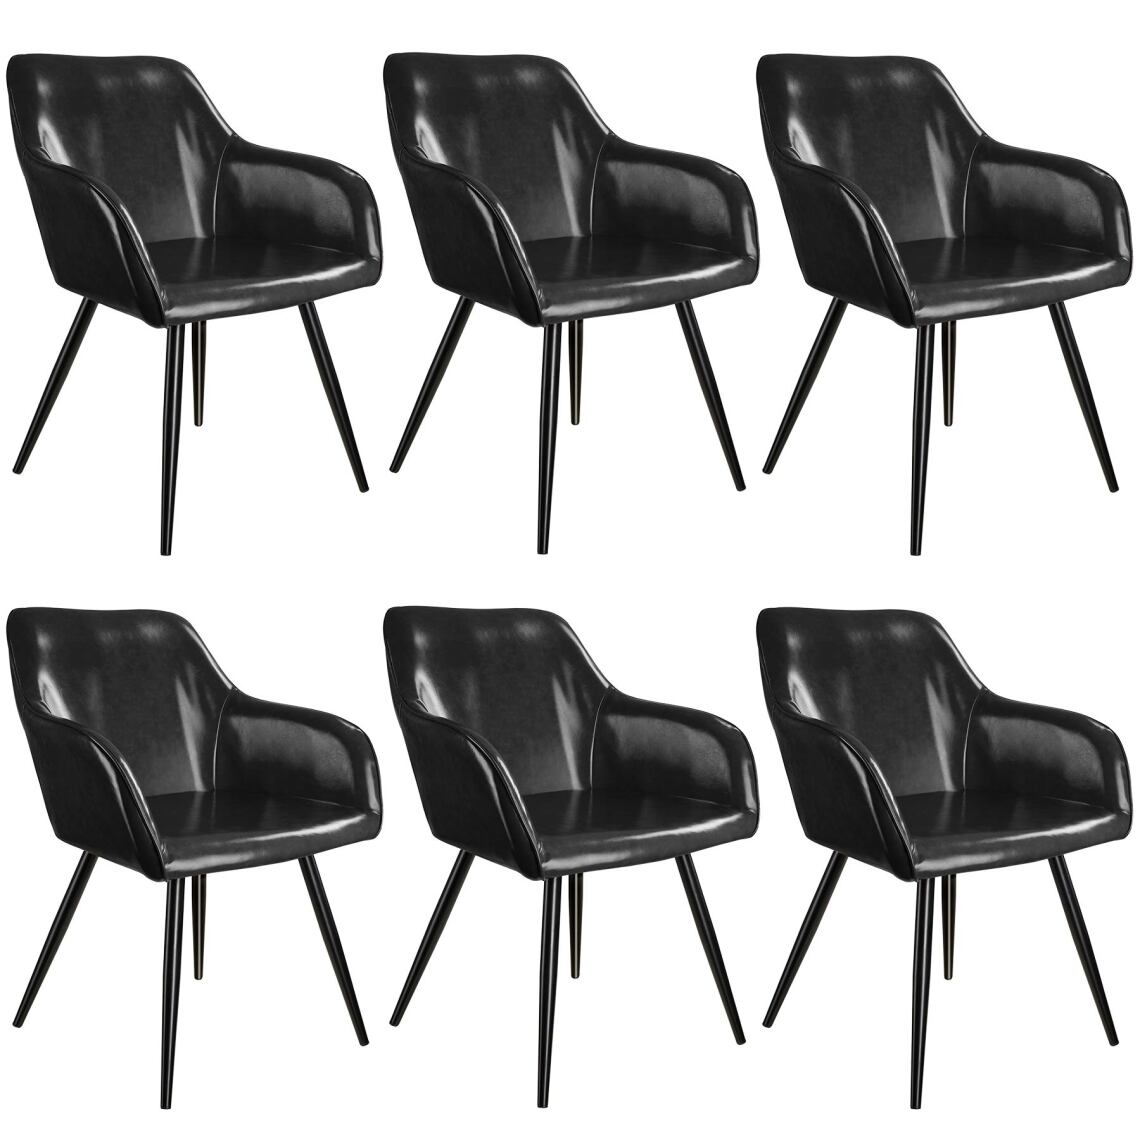 Tectake - 6 Chaises Marilyn en cuir synthétique - noir - Chaises